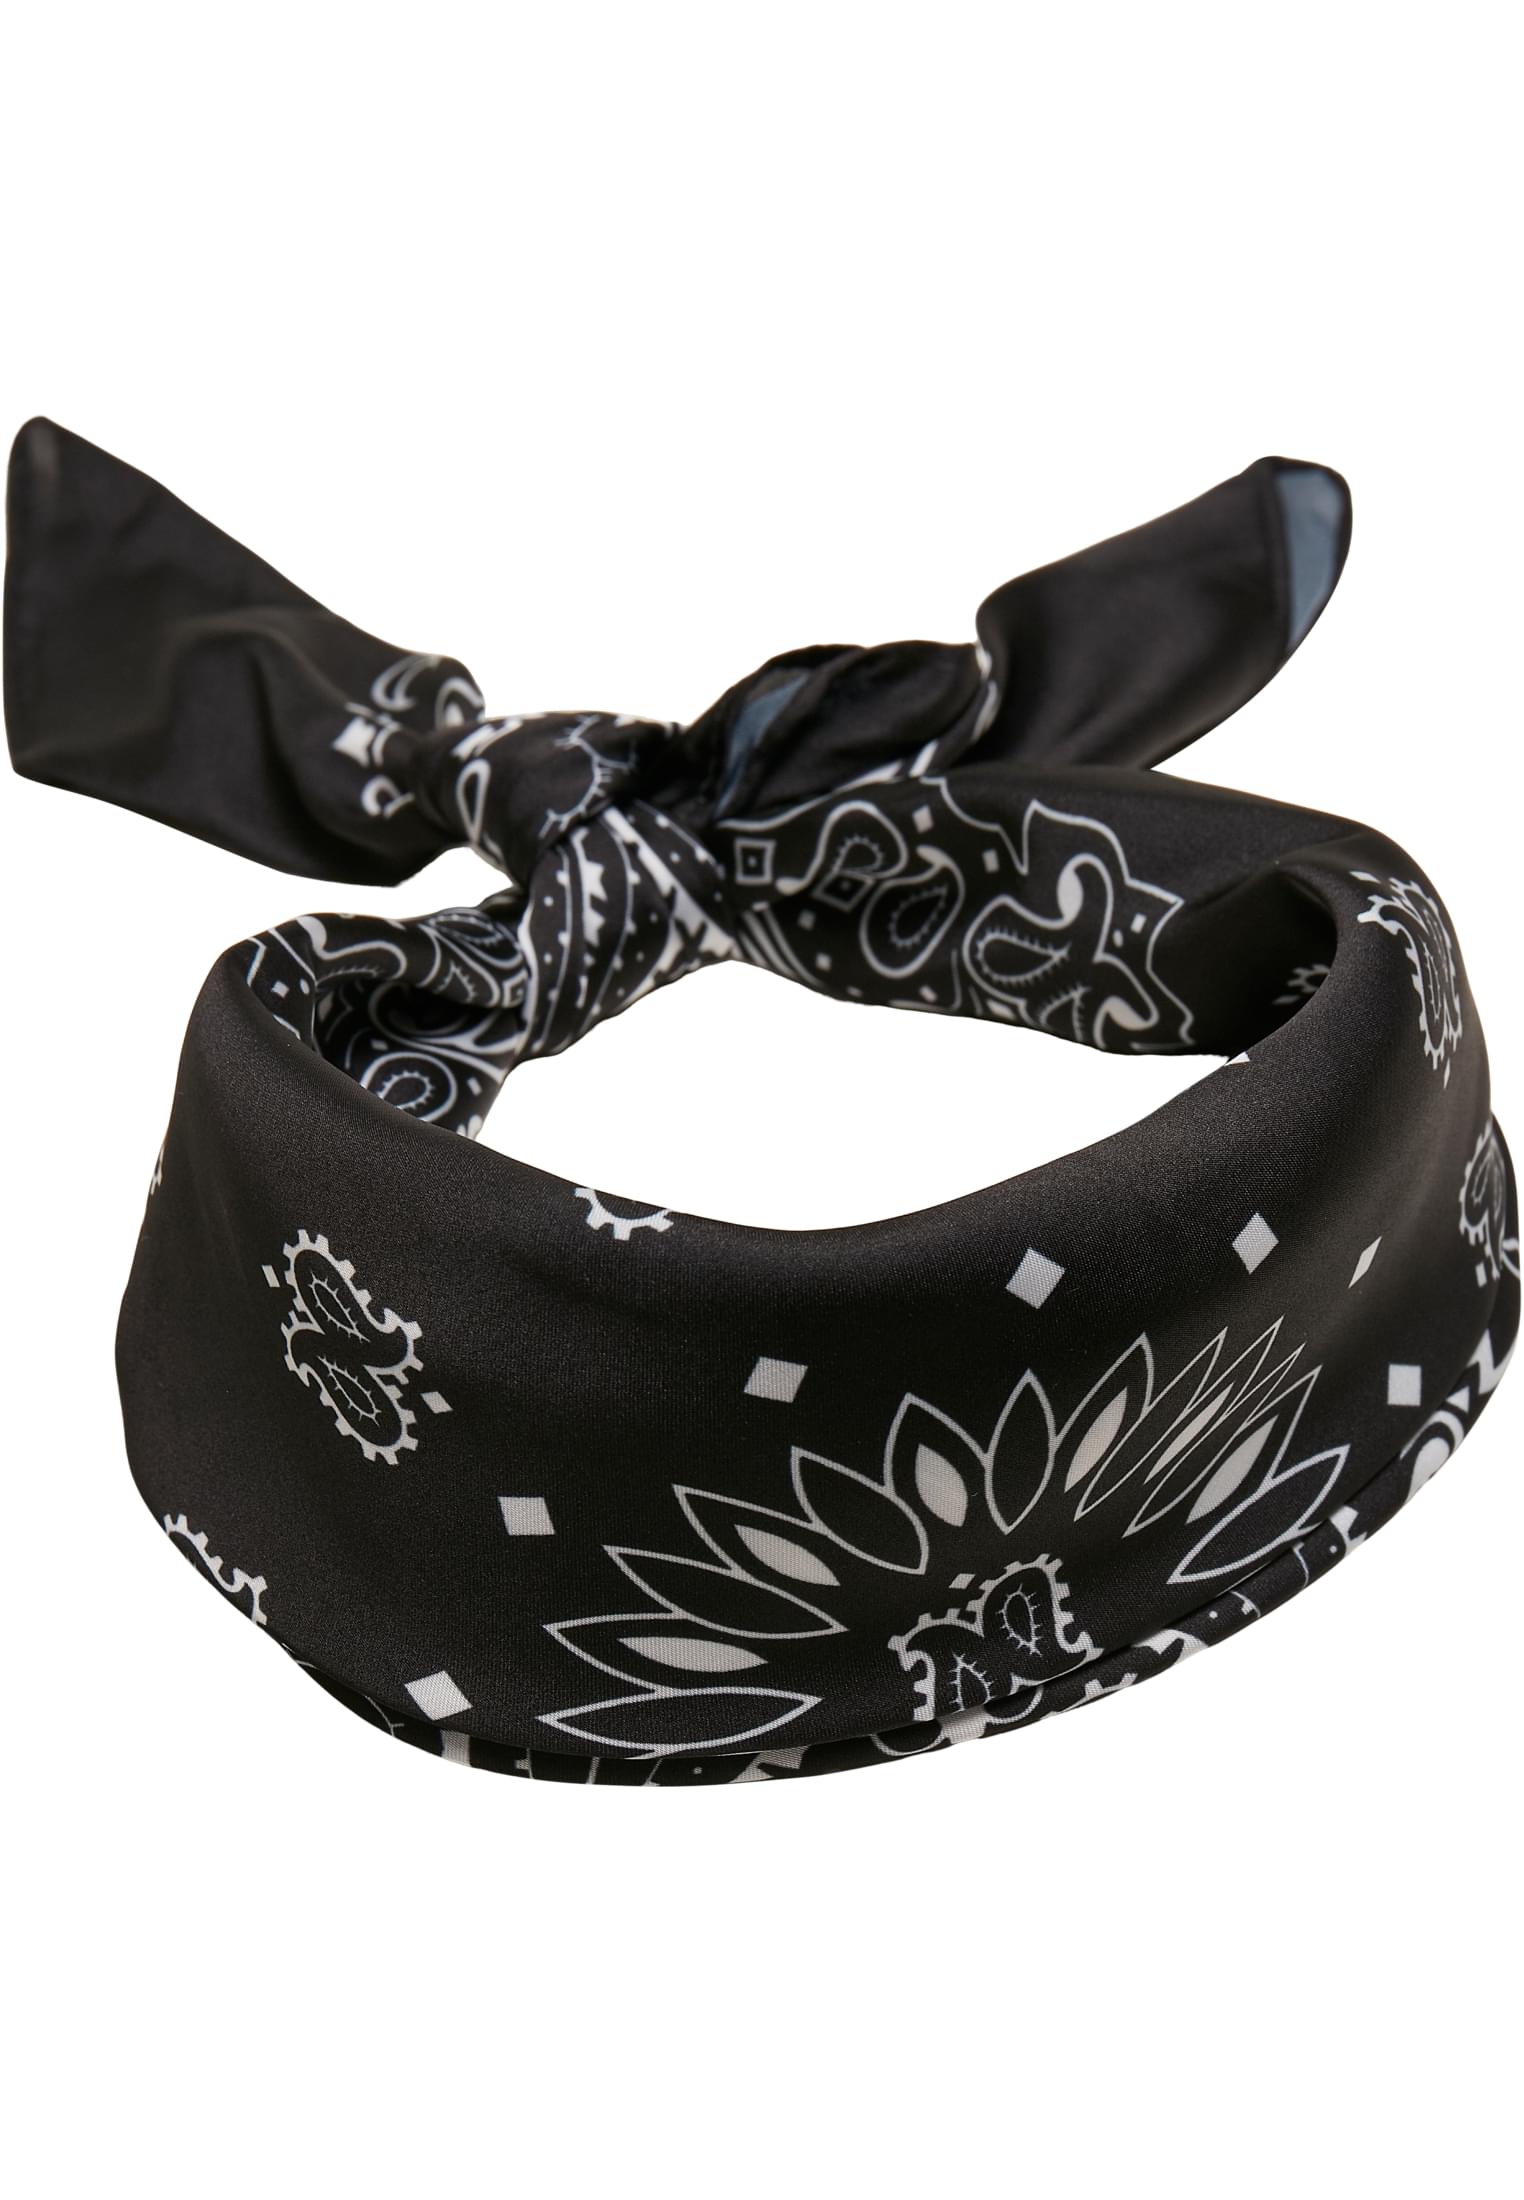 Masken Satin Bandana 2-Pack in Farbe black/lilac